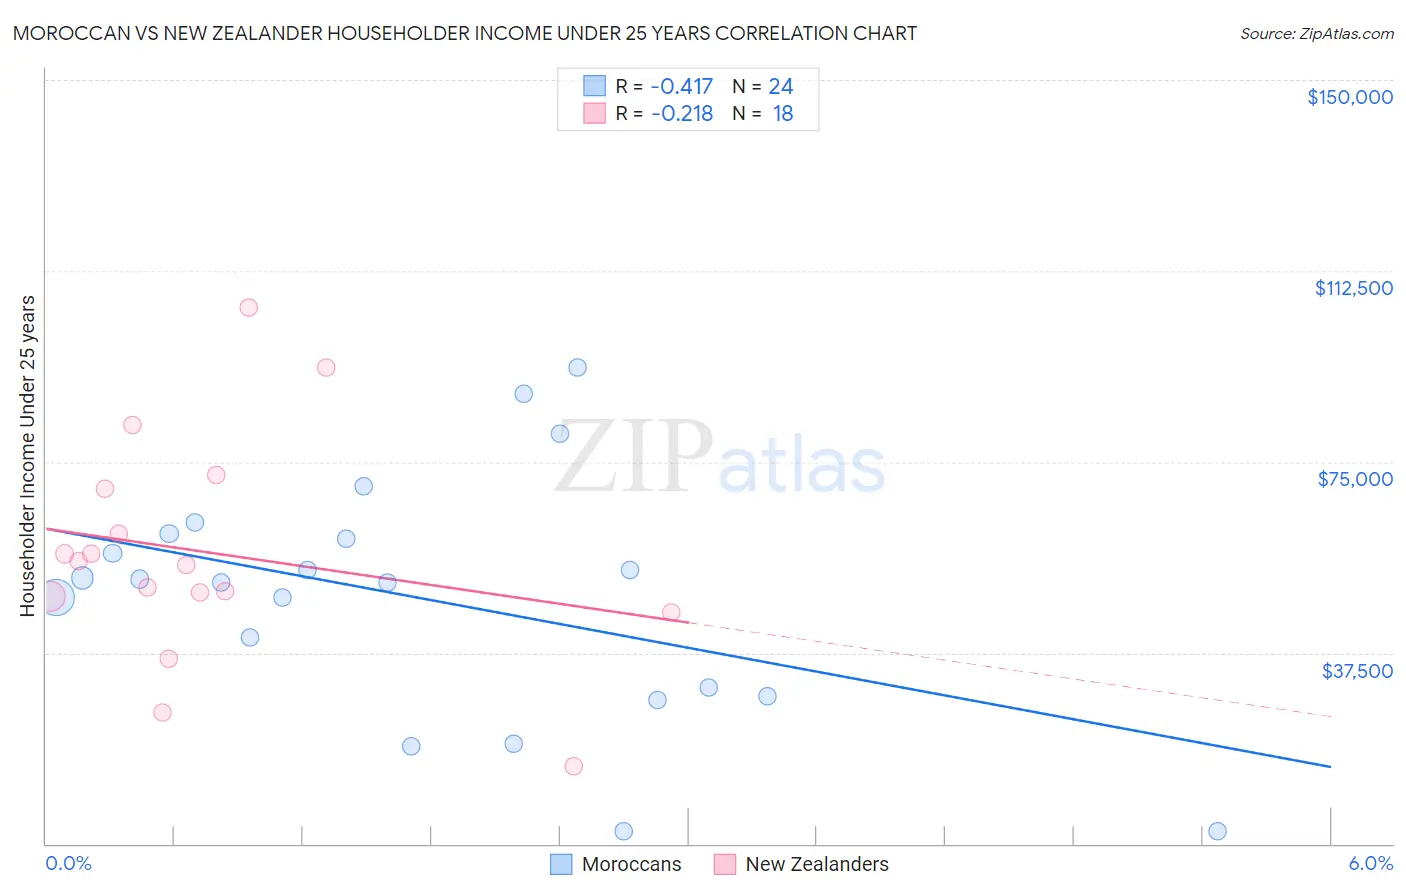 Moroccan vs New Zealander Householder Income Under 25 years